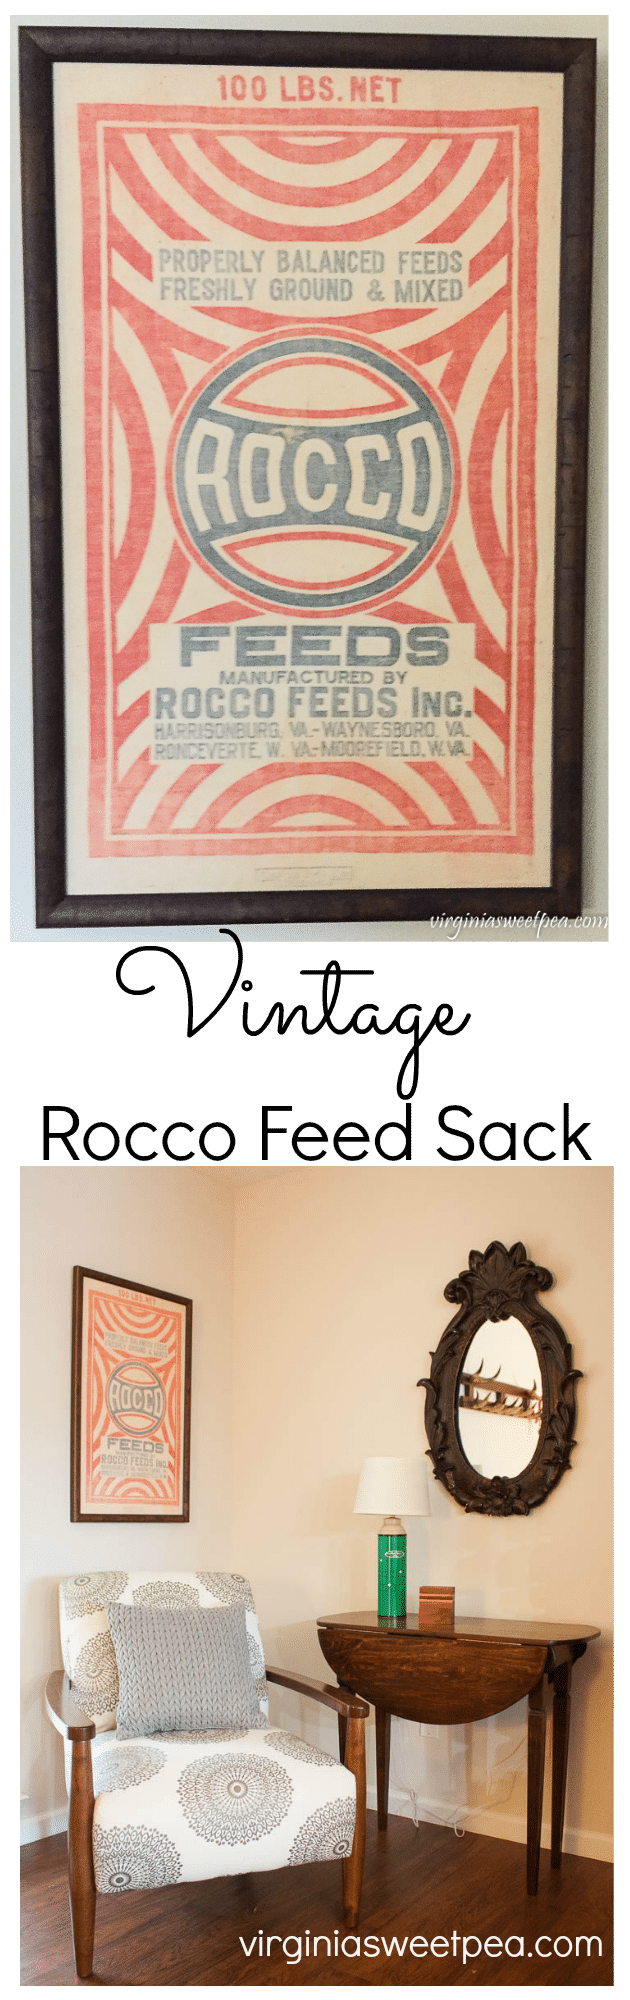 Vintage Rocco Feed Sack from Waynesboro, Virginia - virginiasweetpea.com